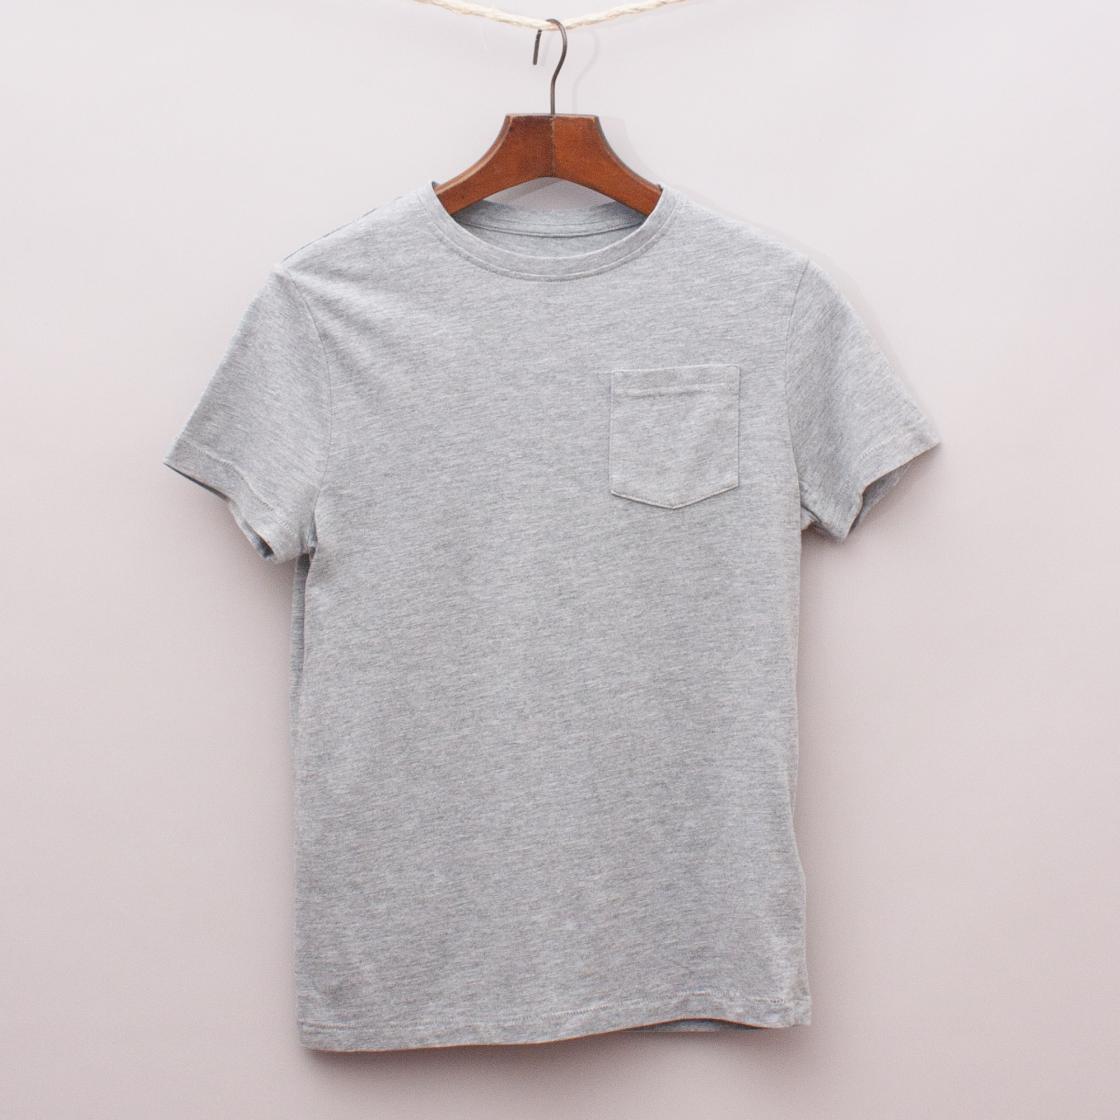 M&S Grey T-Shirt